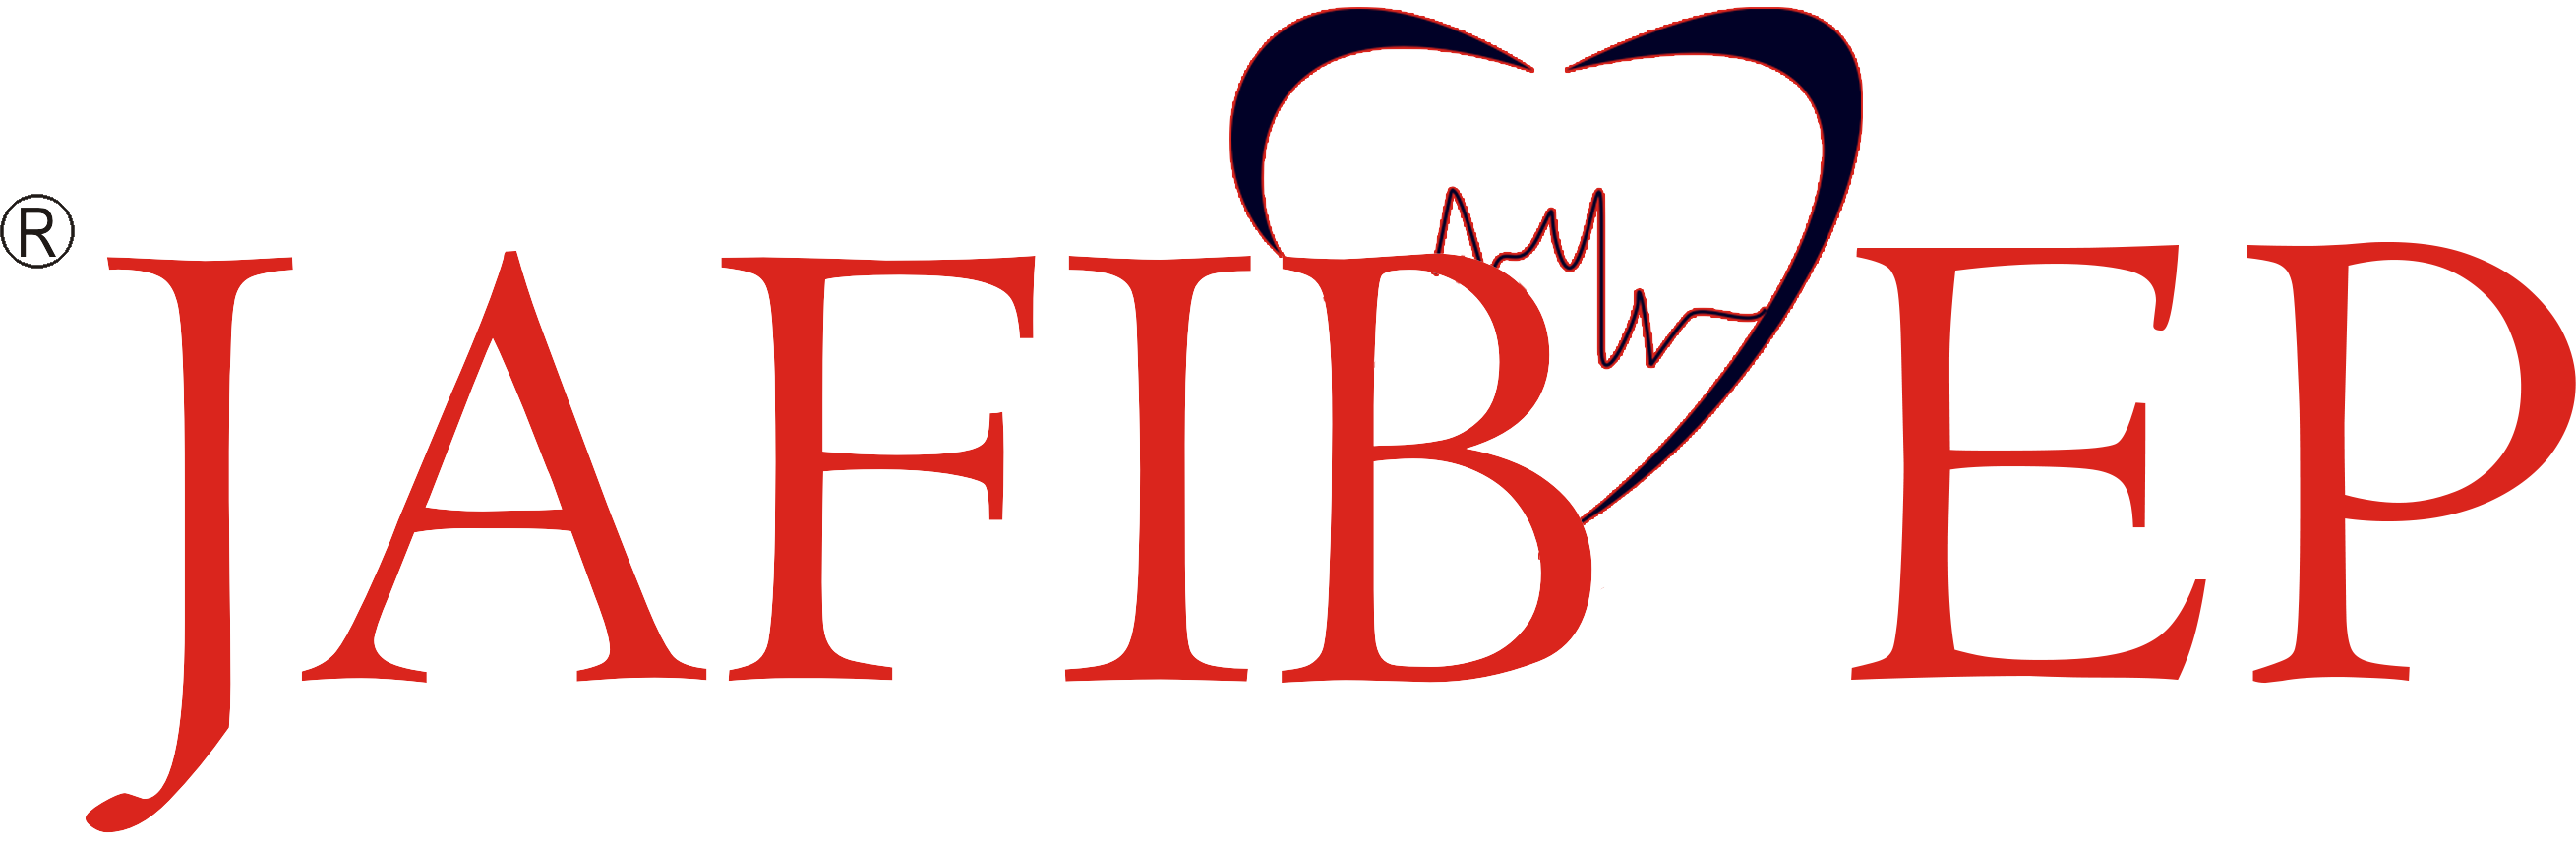 jafib logo